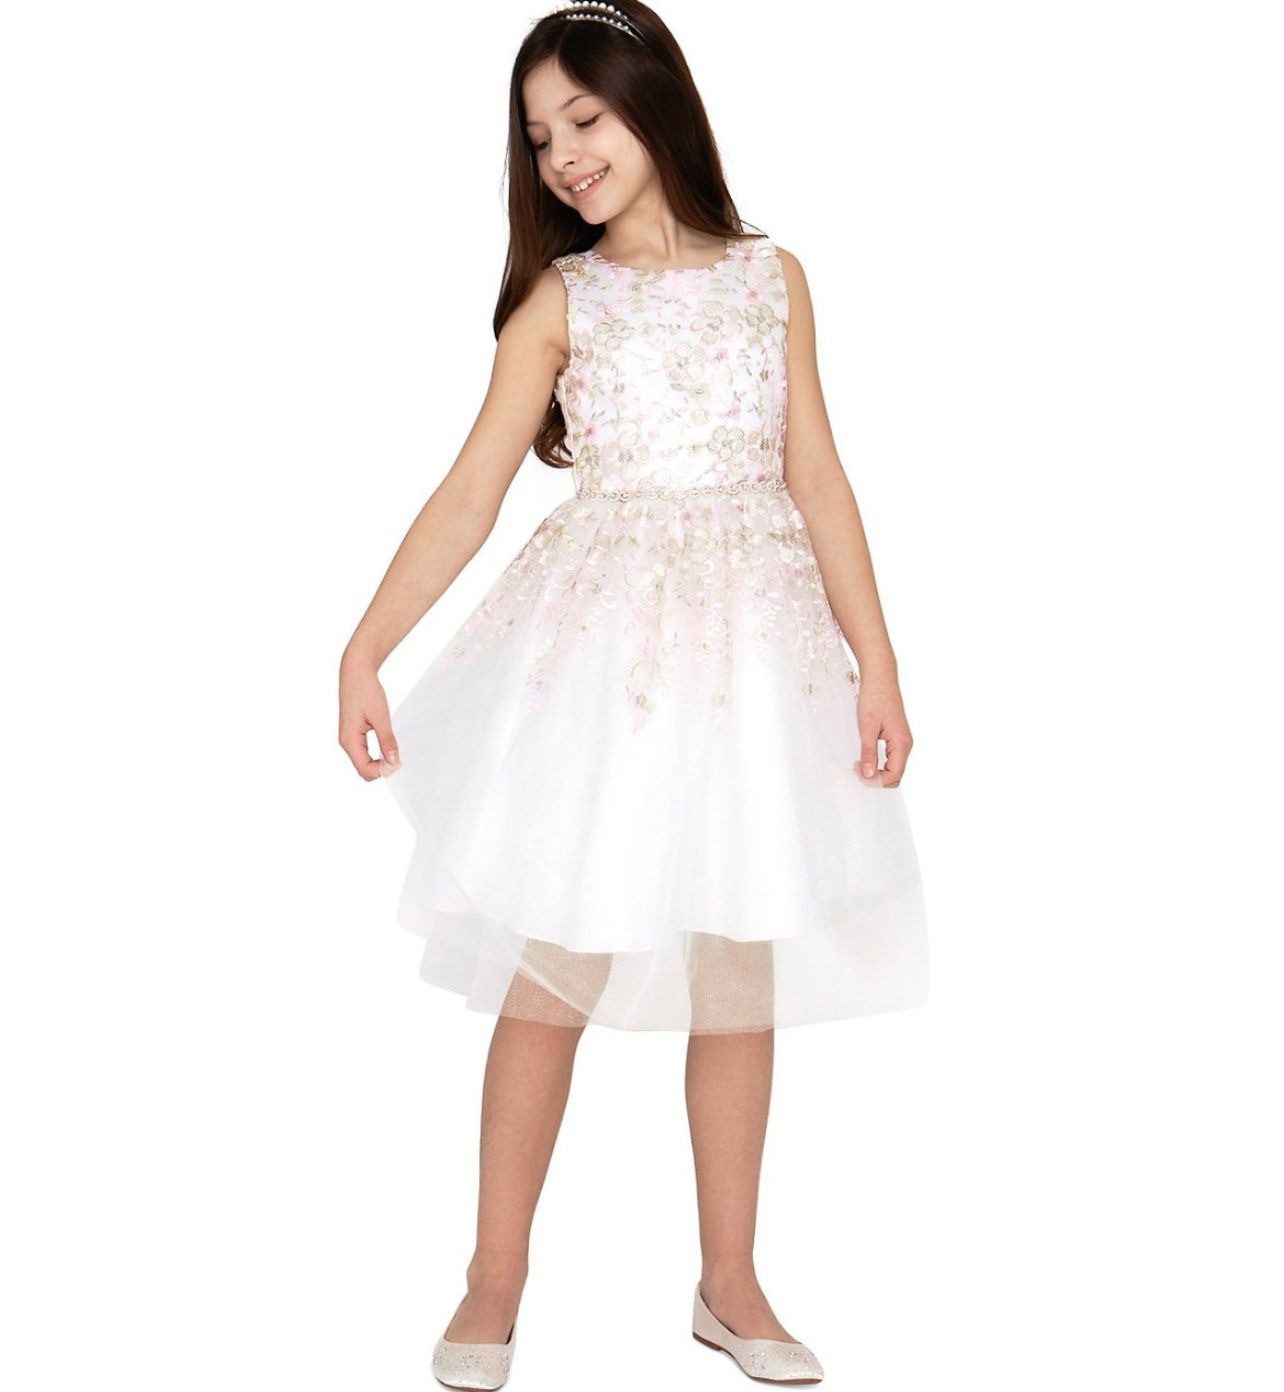 Shimmer floral embroidered dress for little girls Toddler Girls 2T Dress